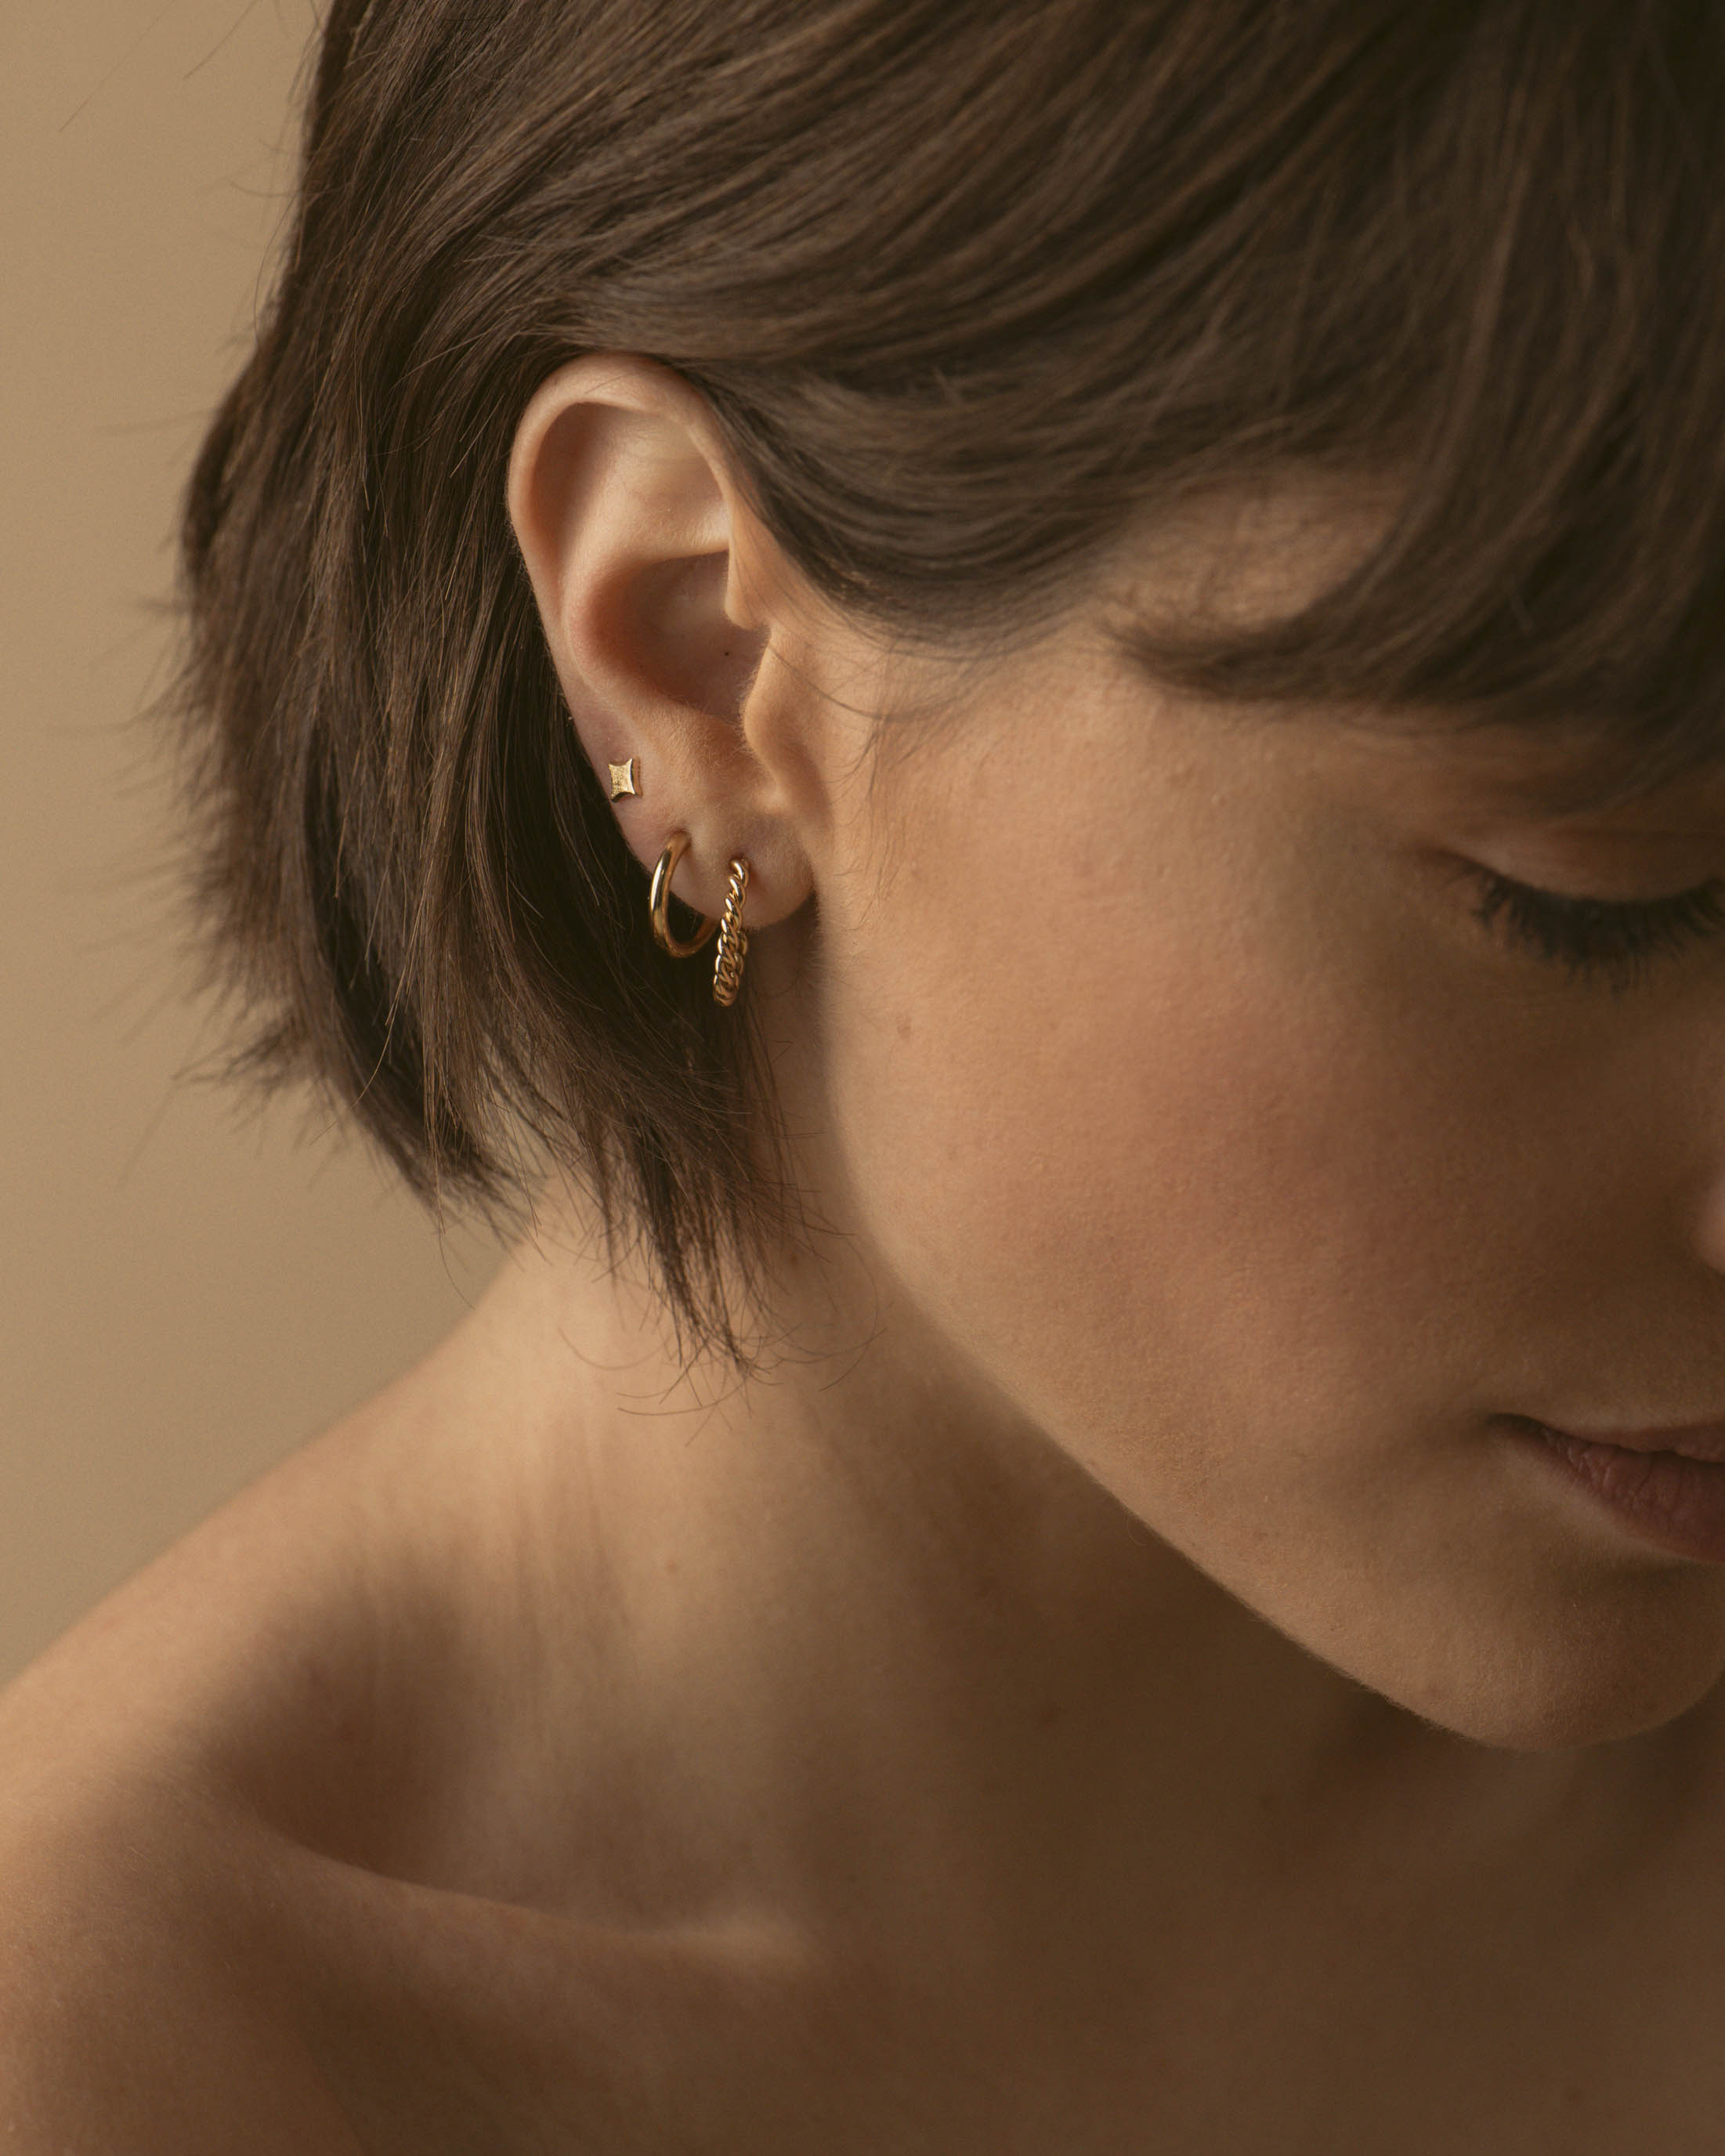 Gabrielle earrings composition